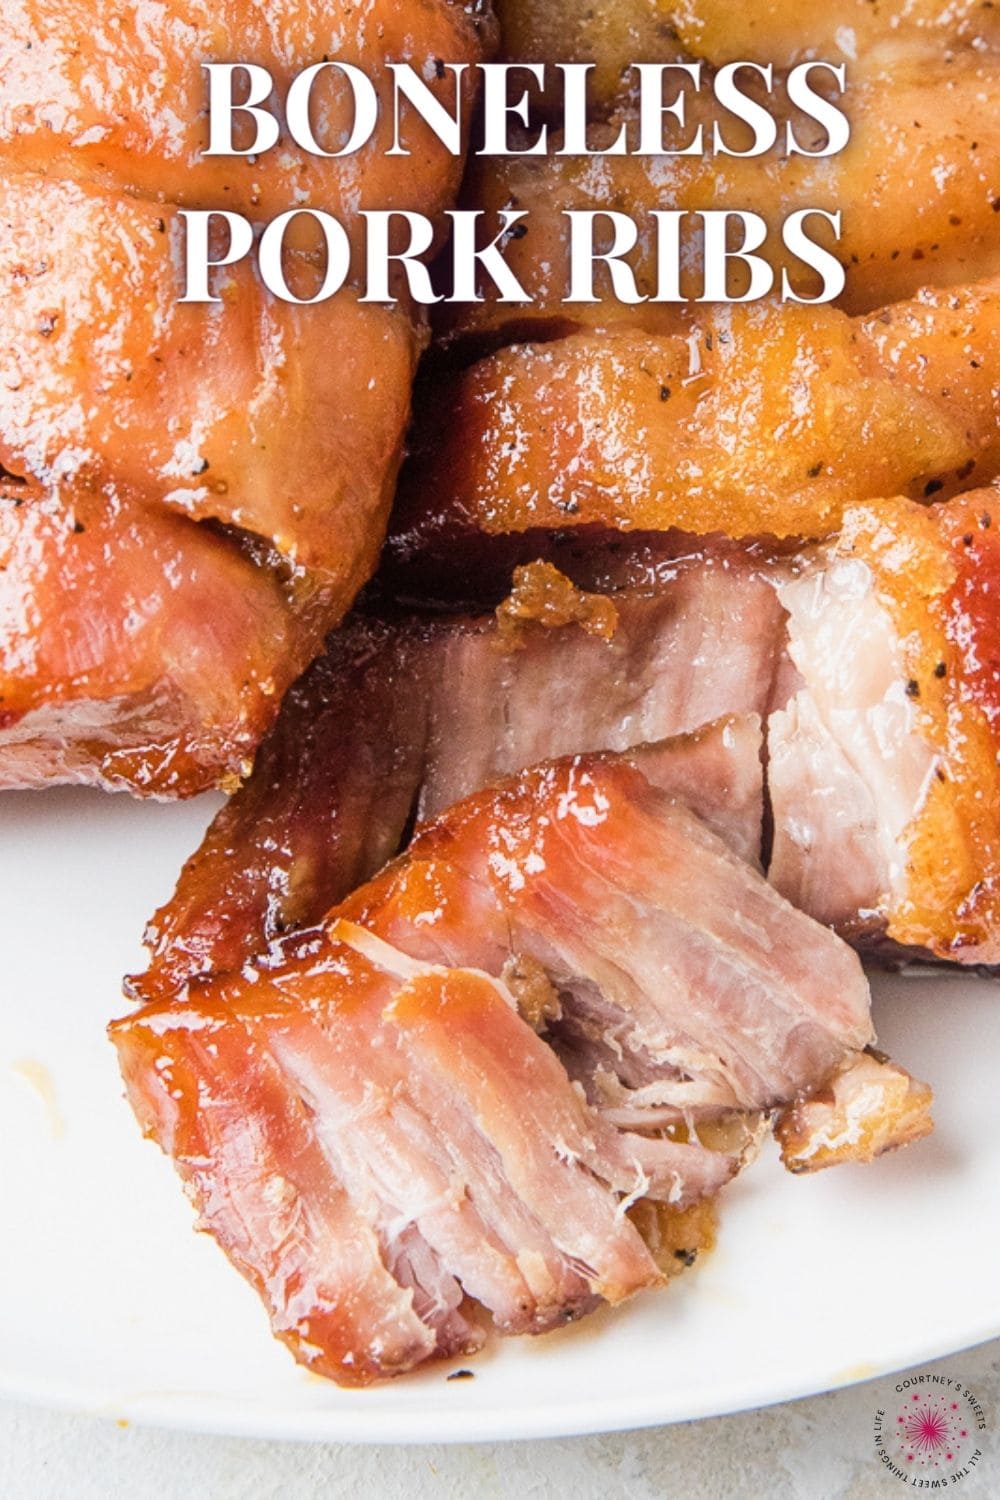 boneless pork ribs with text saying boneless pork ribs on image for pinterest.